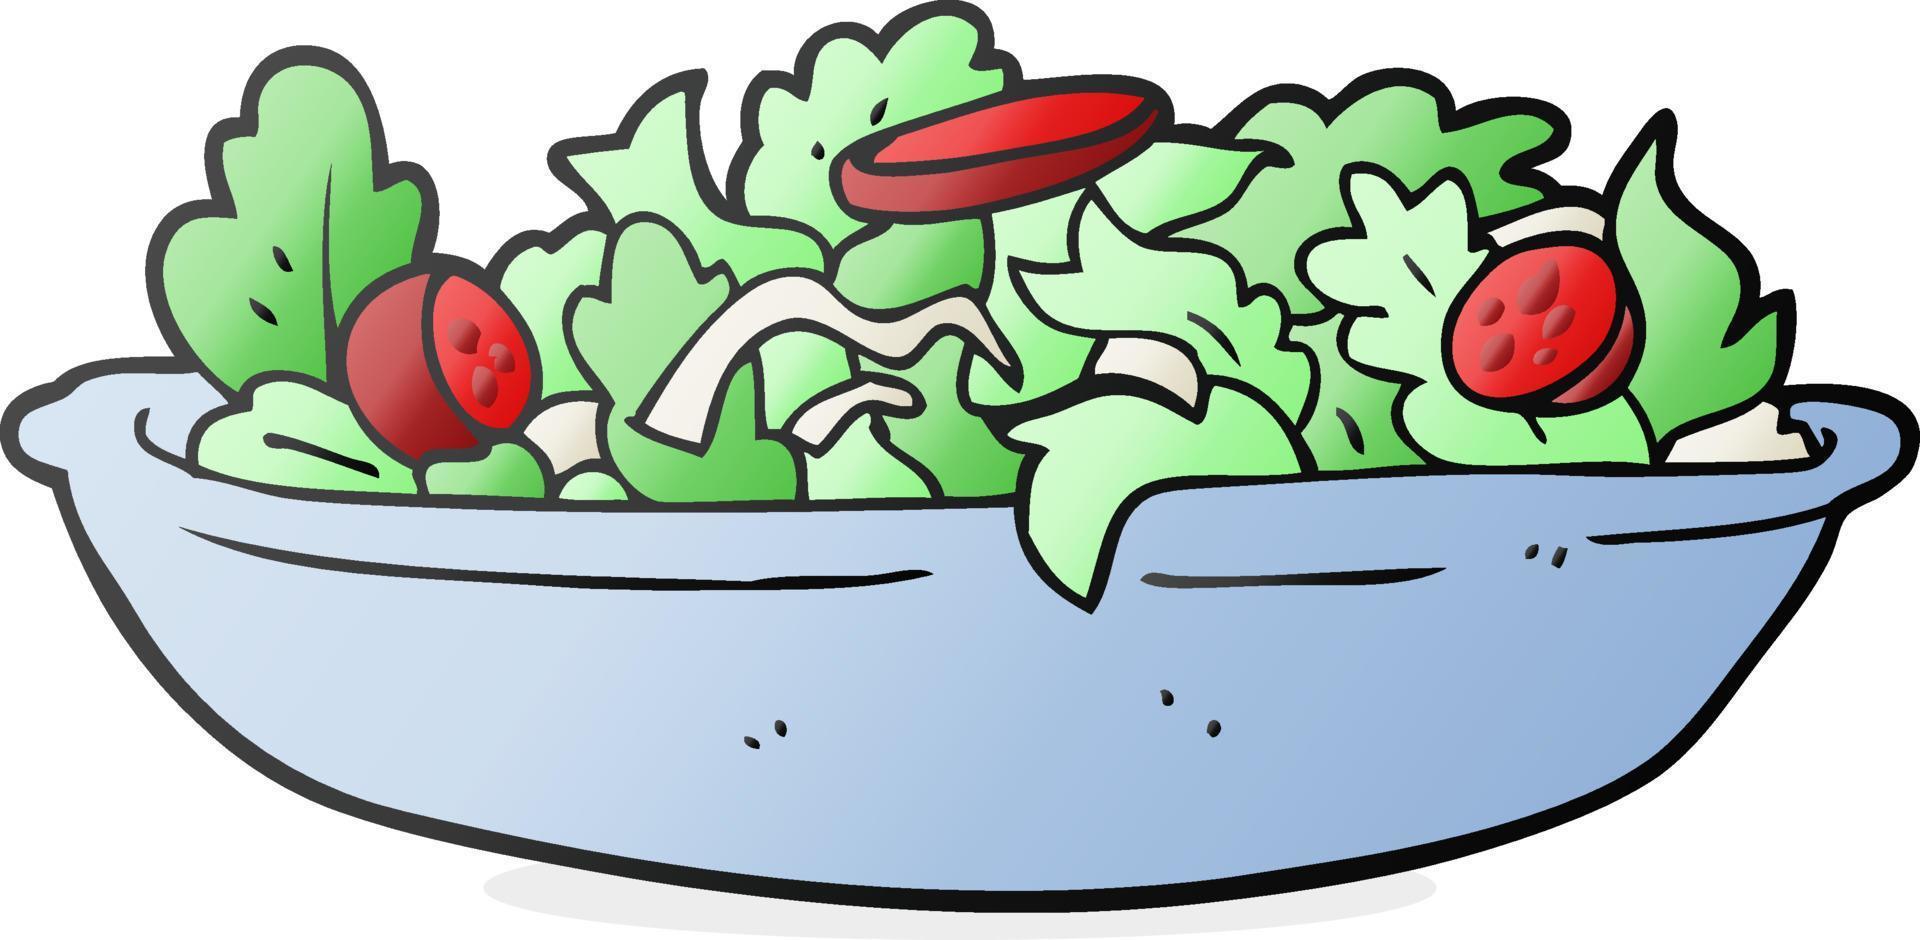 doodle character cartoon salad vector